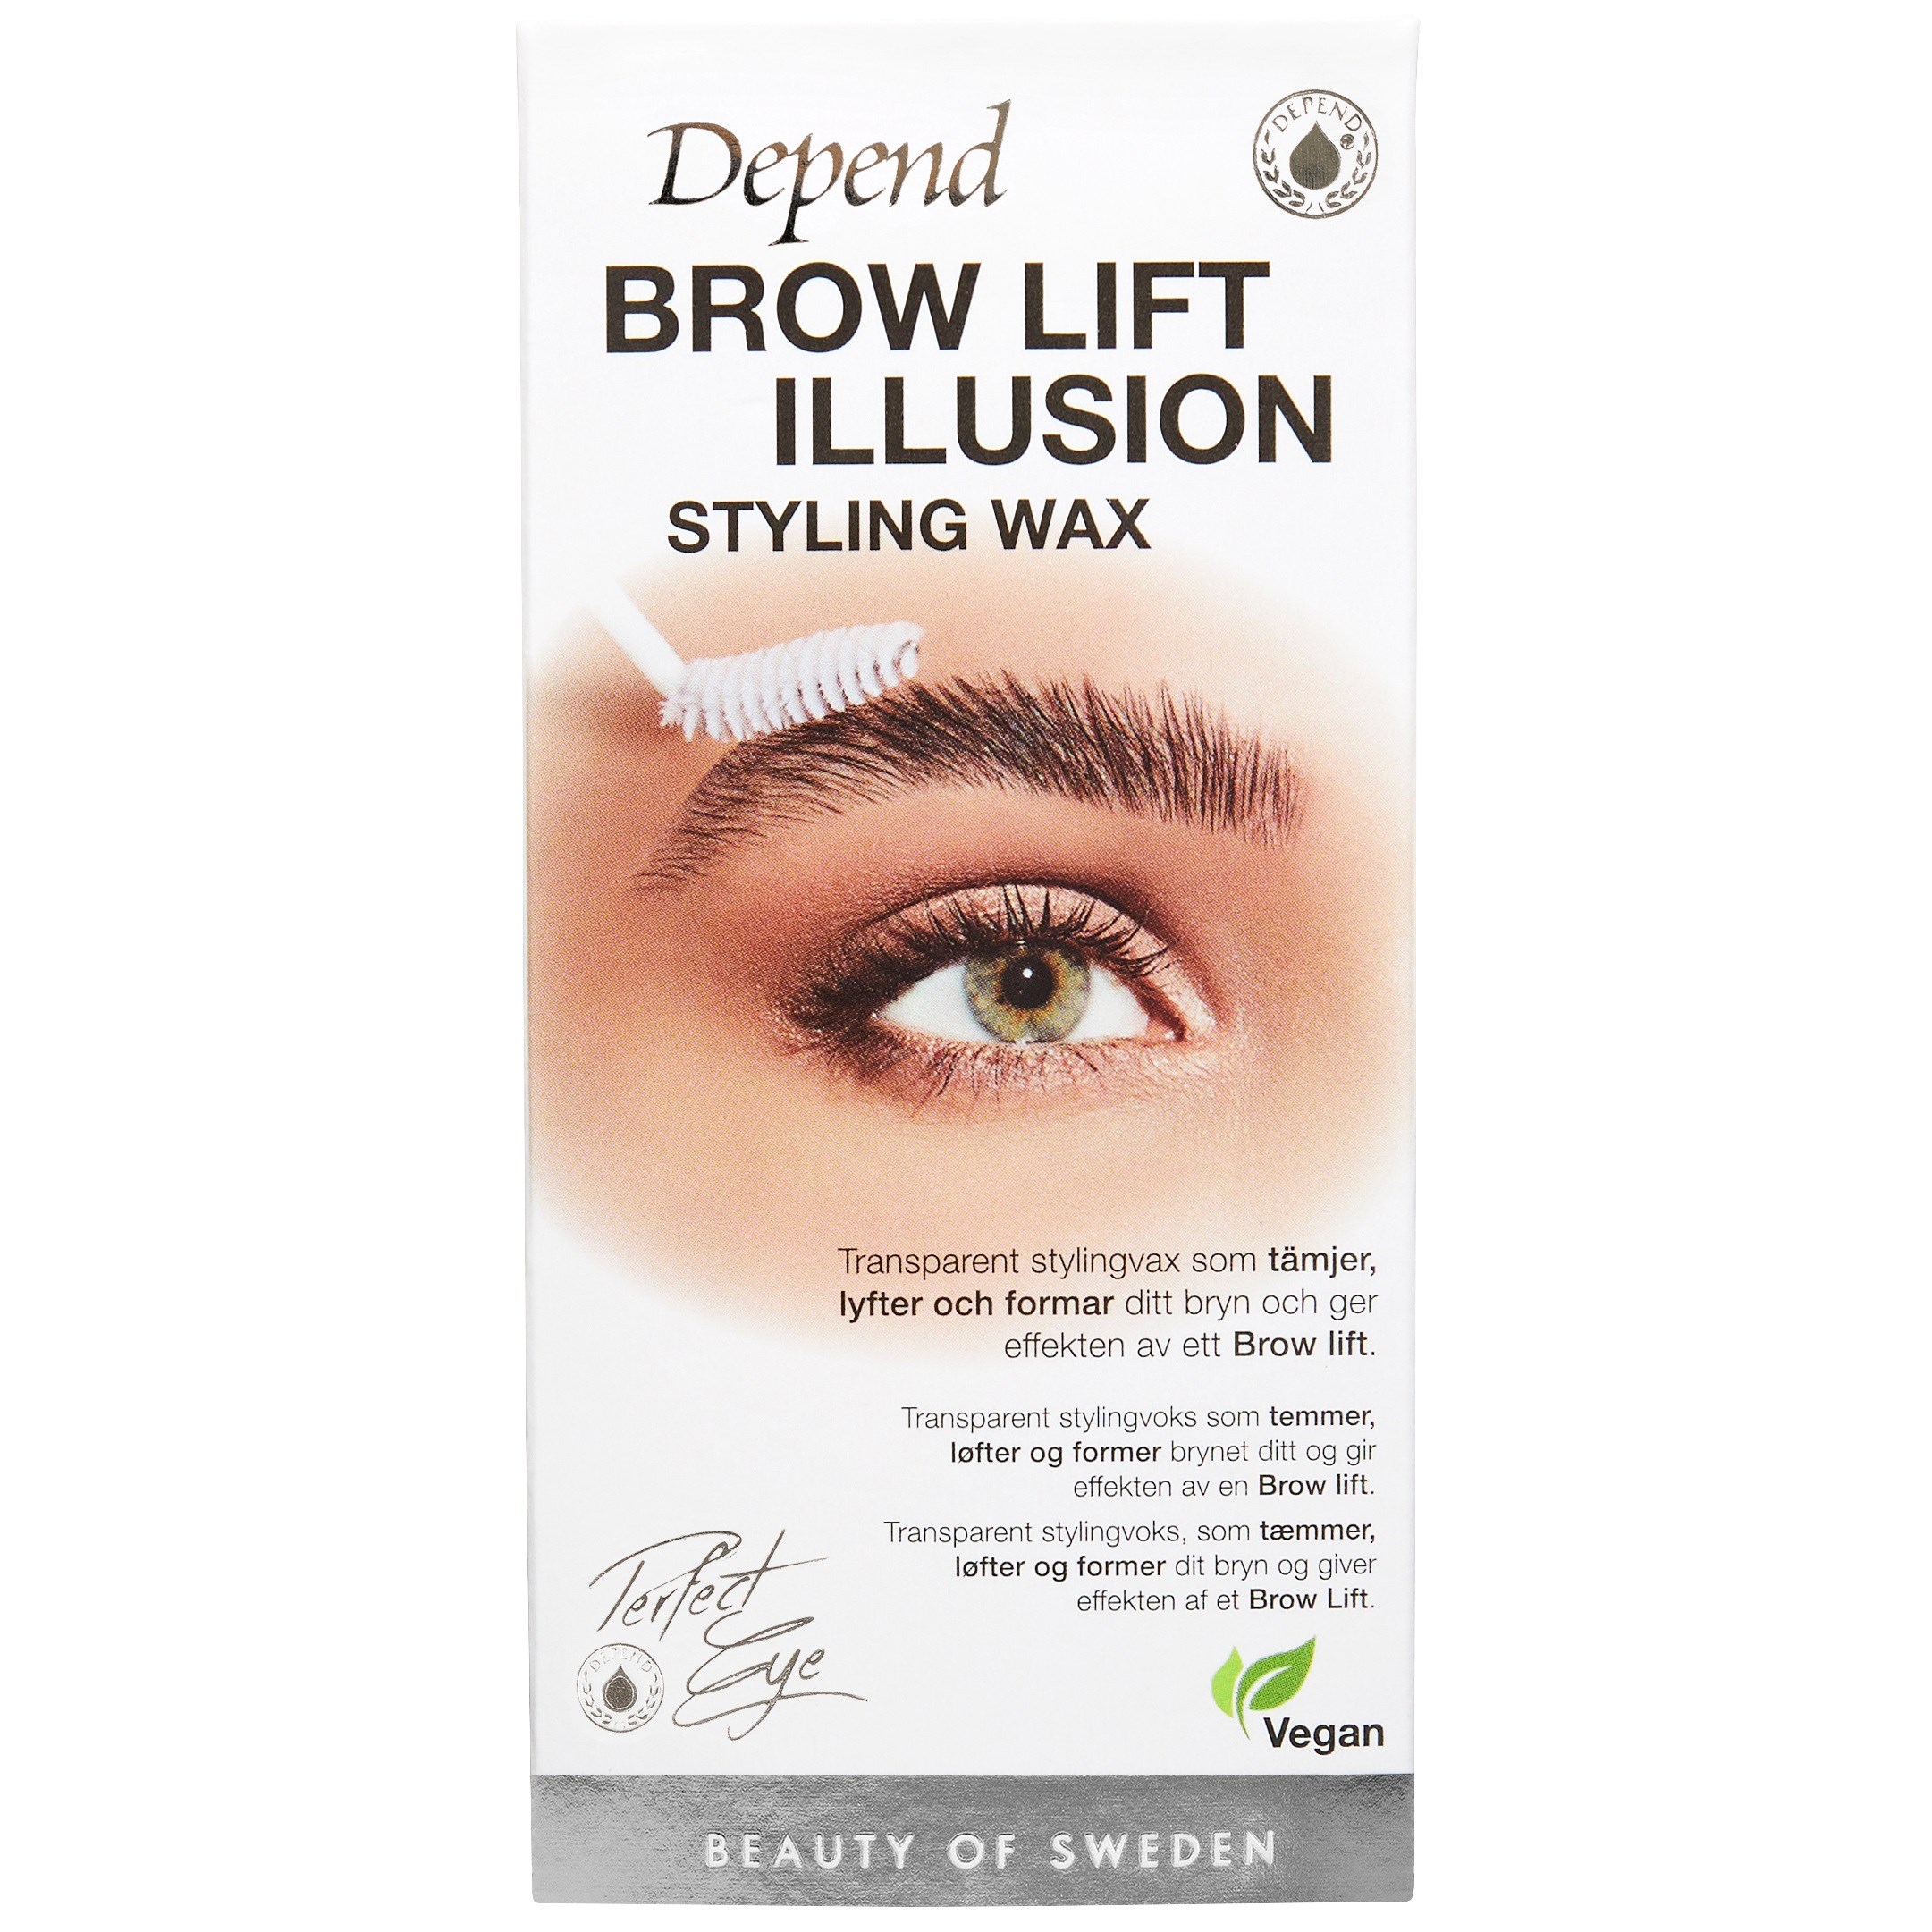 Bilde av Depend Perfect Eye Brow Lift Illusion Styling Wax